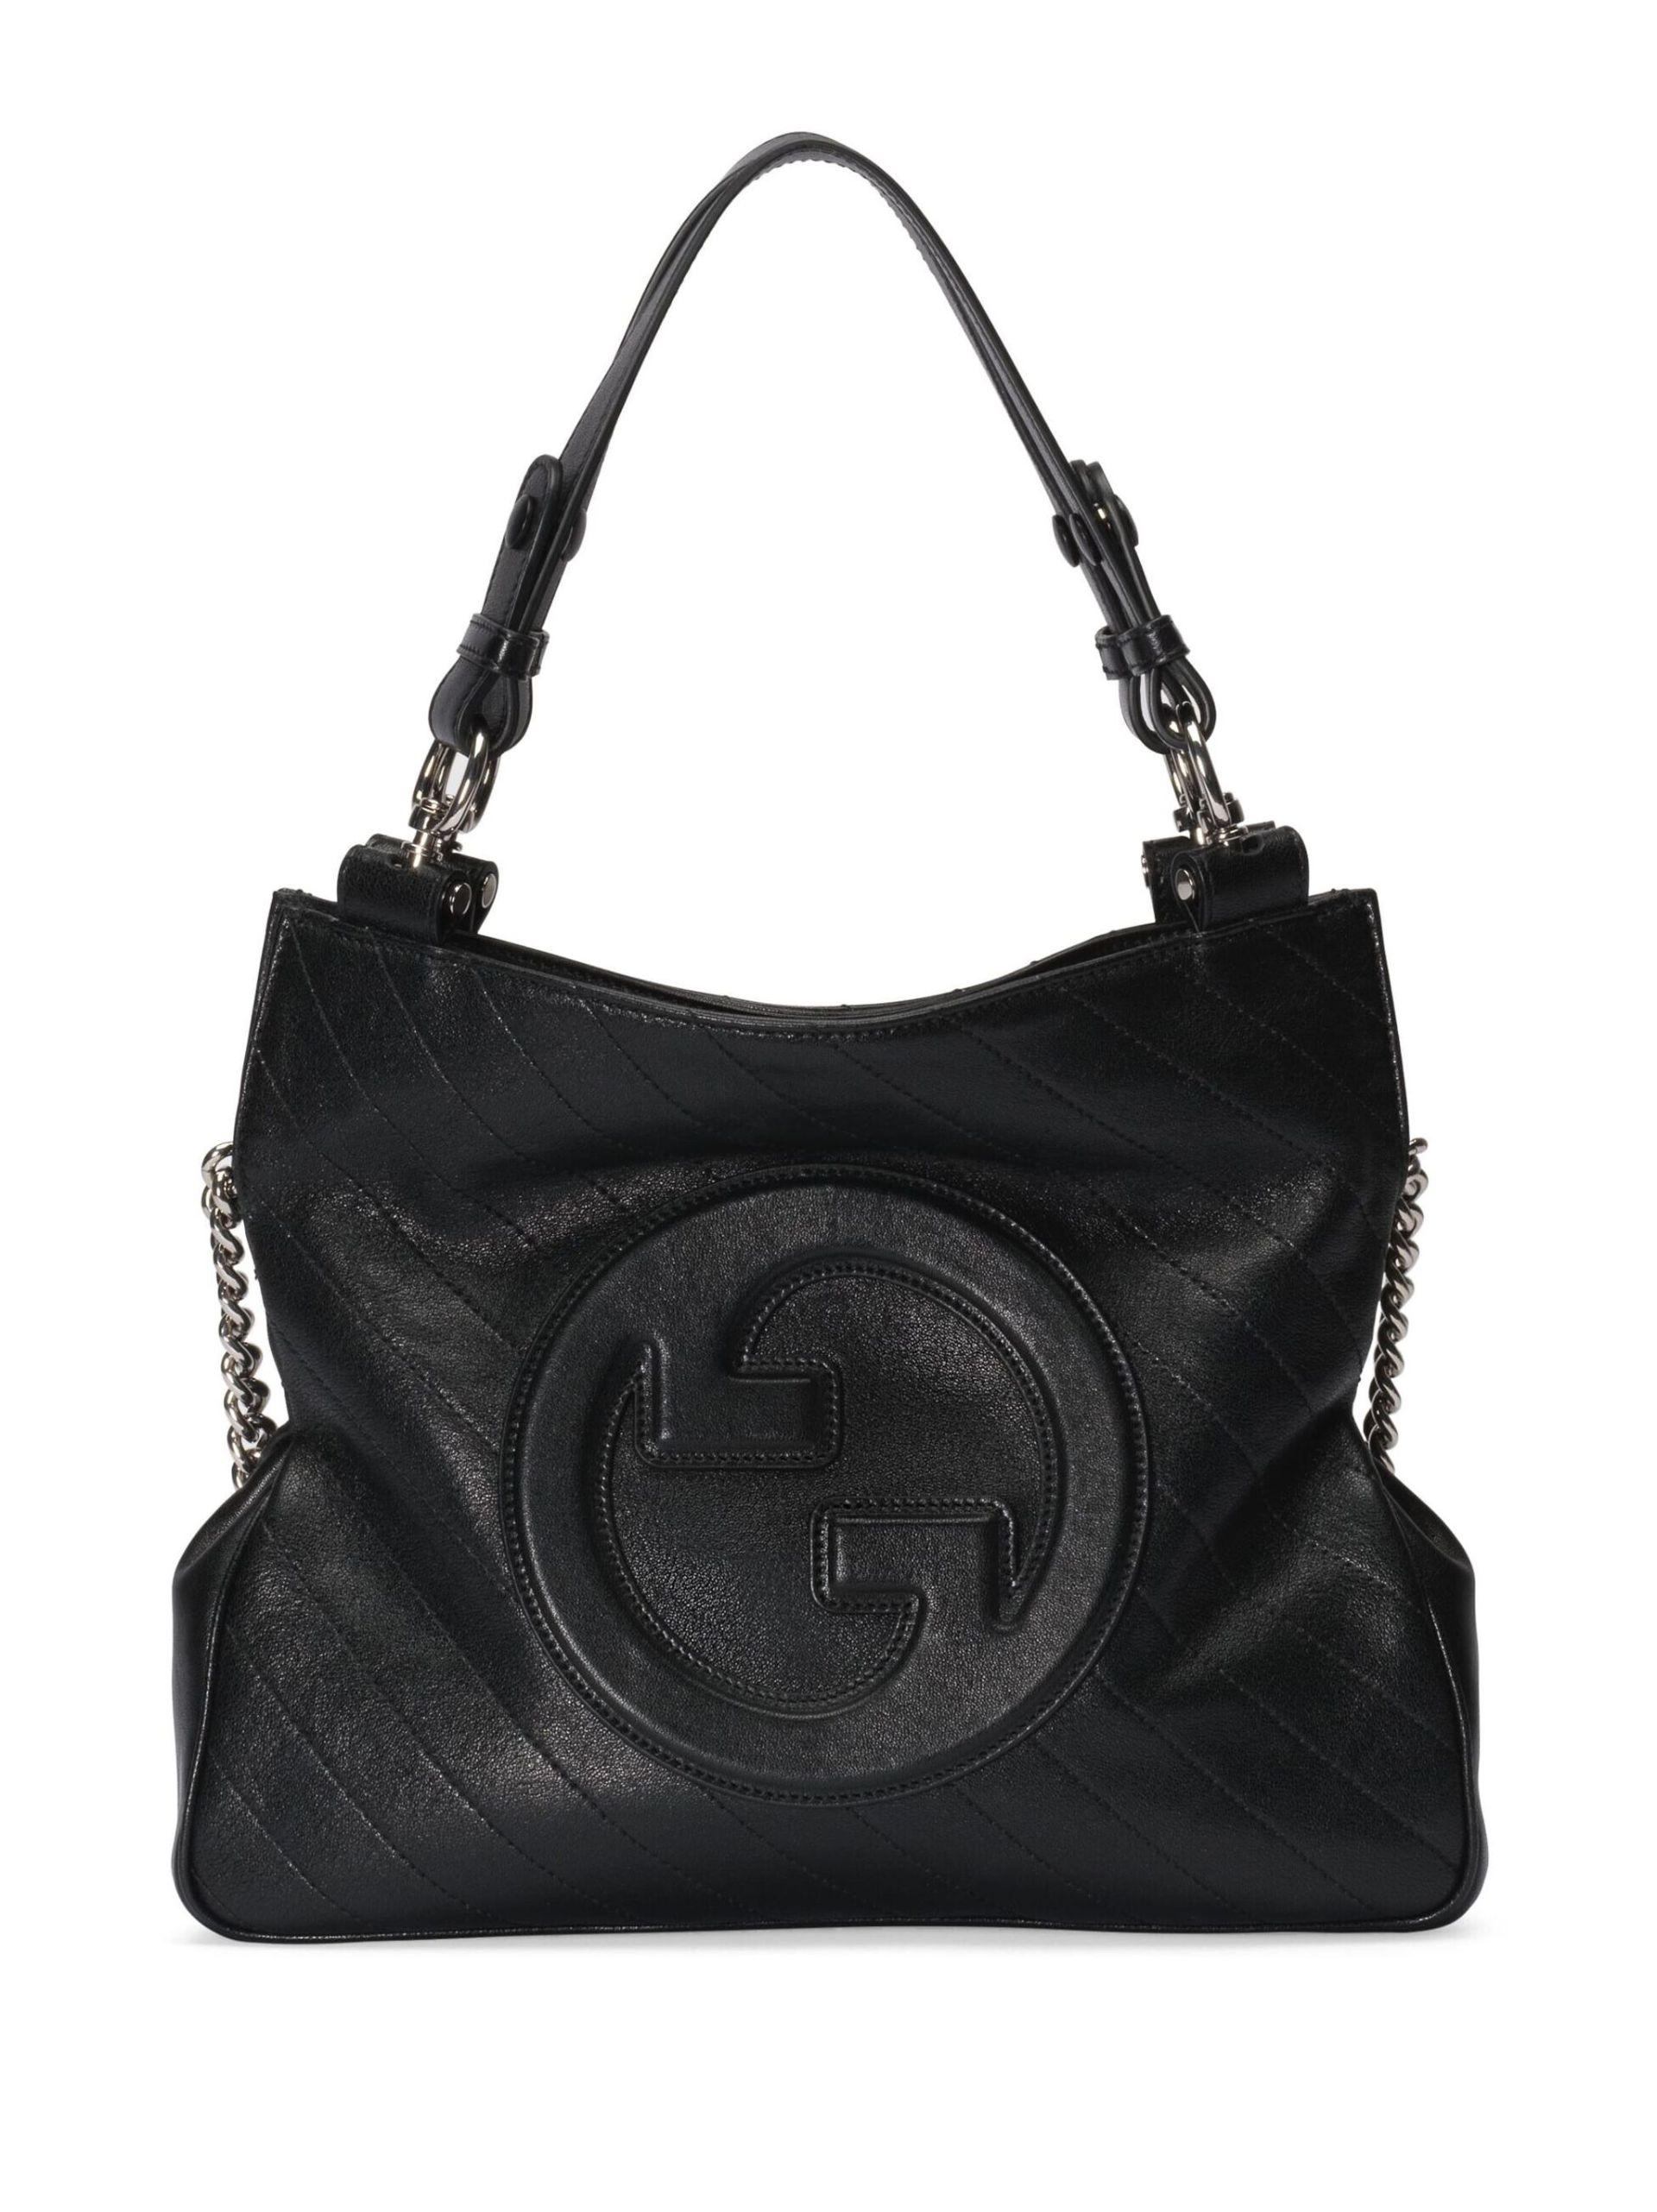 Gucci Interlocking G Leather Tote Bag in Black | Lyst